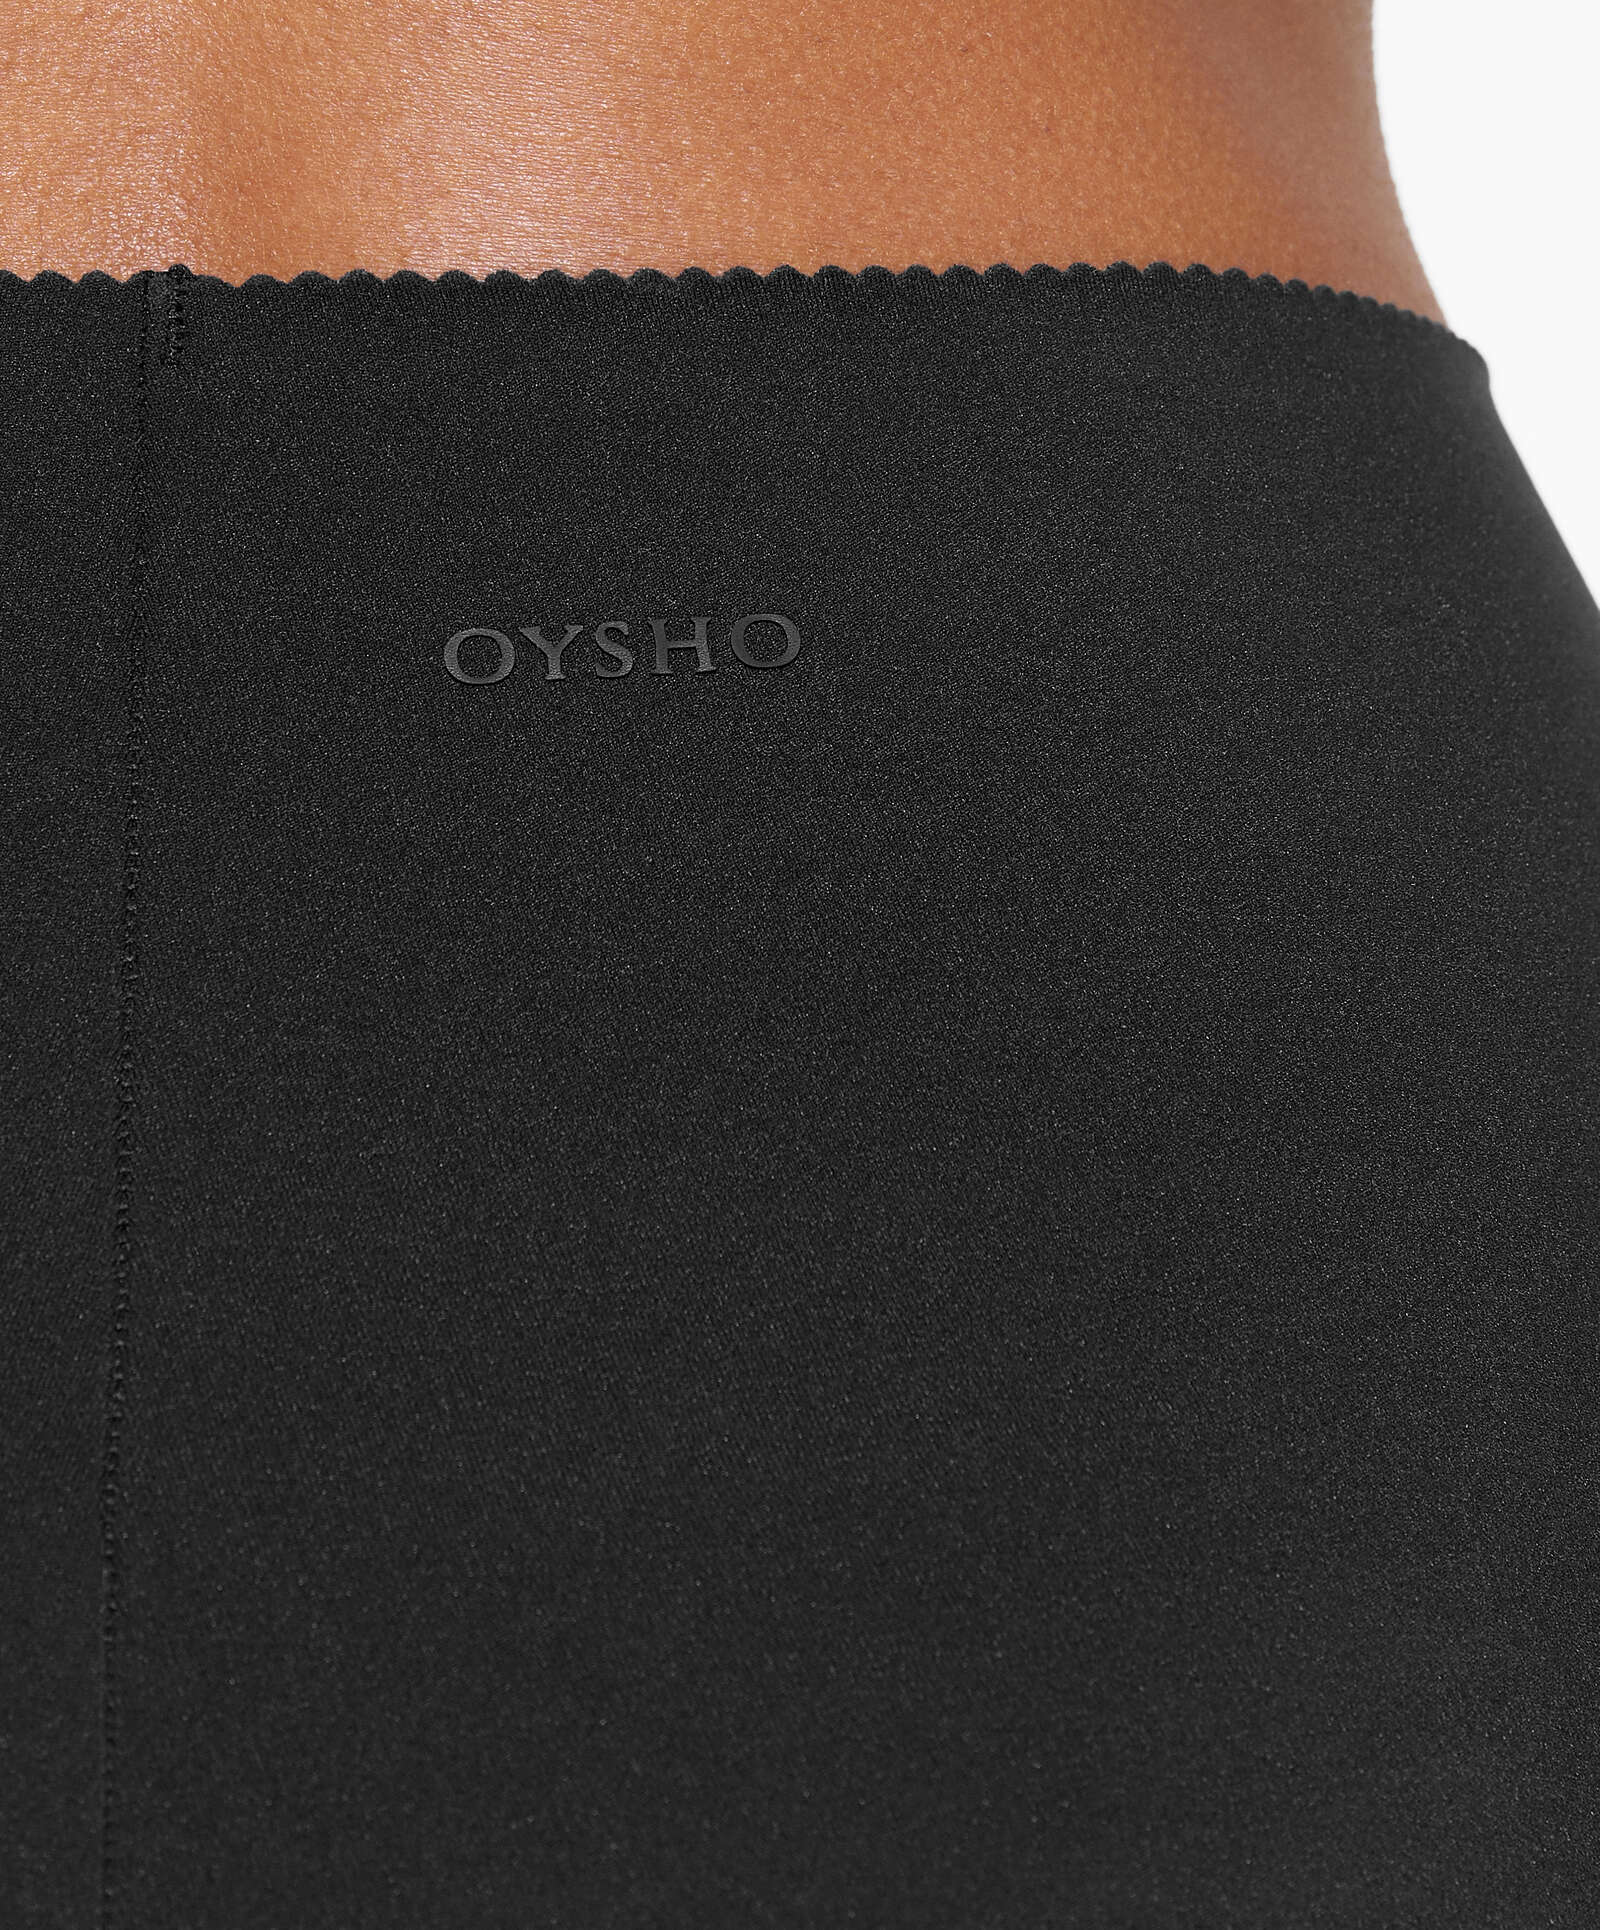 Oysho Compressive core control 25cm cycle leggings - 136653720-800